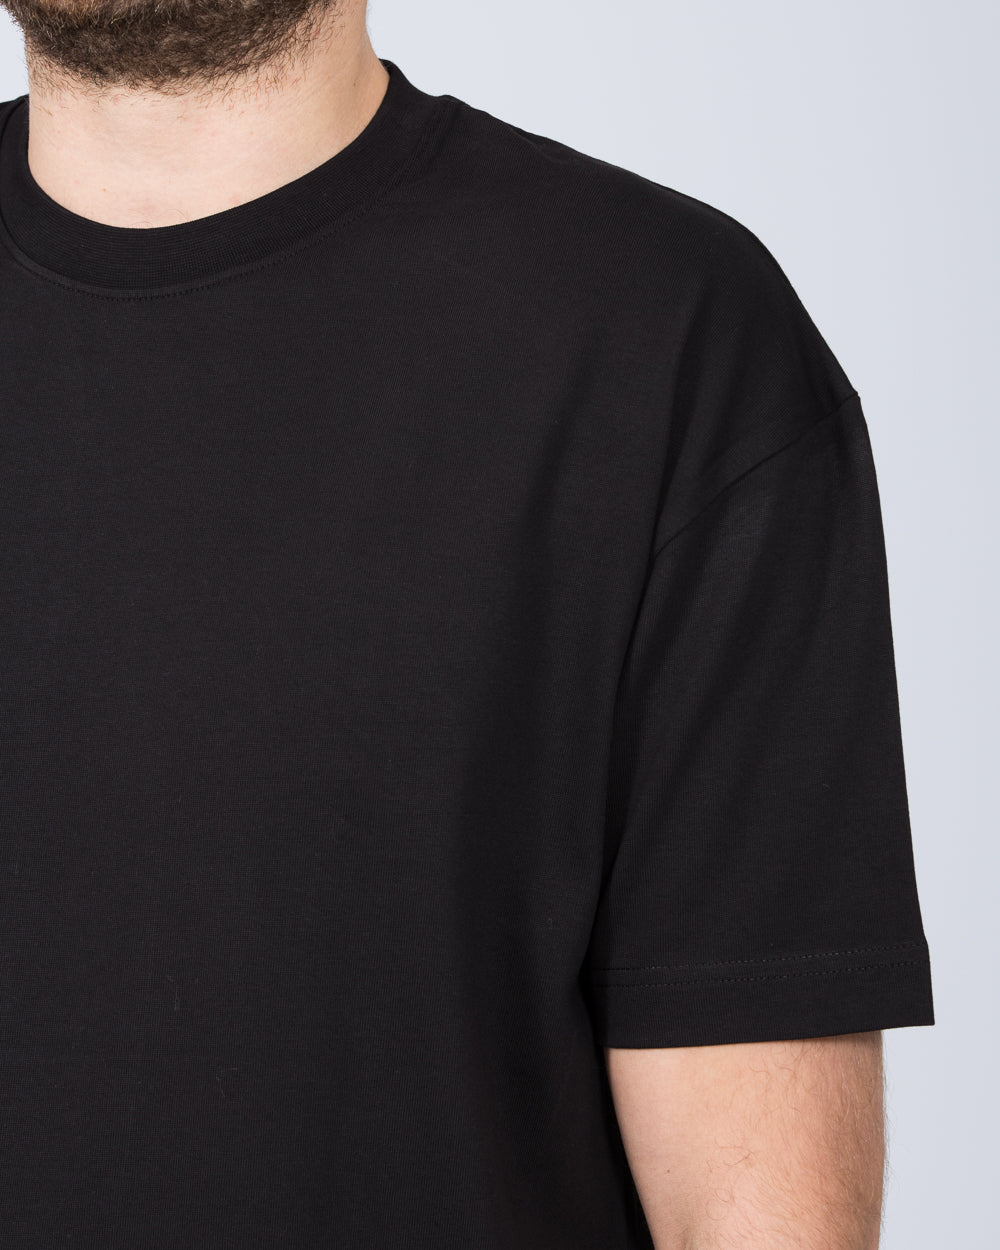 Girav Dallas Extra Tall Oversized T-Shirt (black)